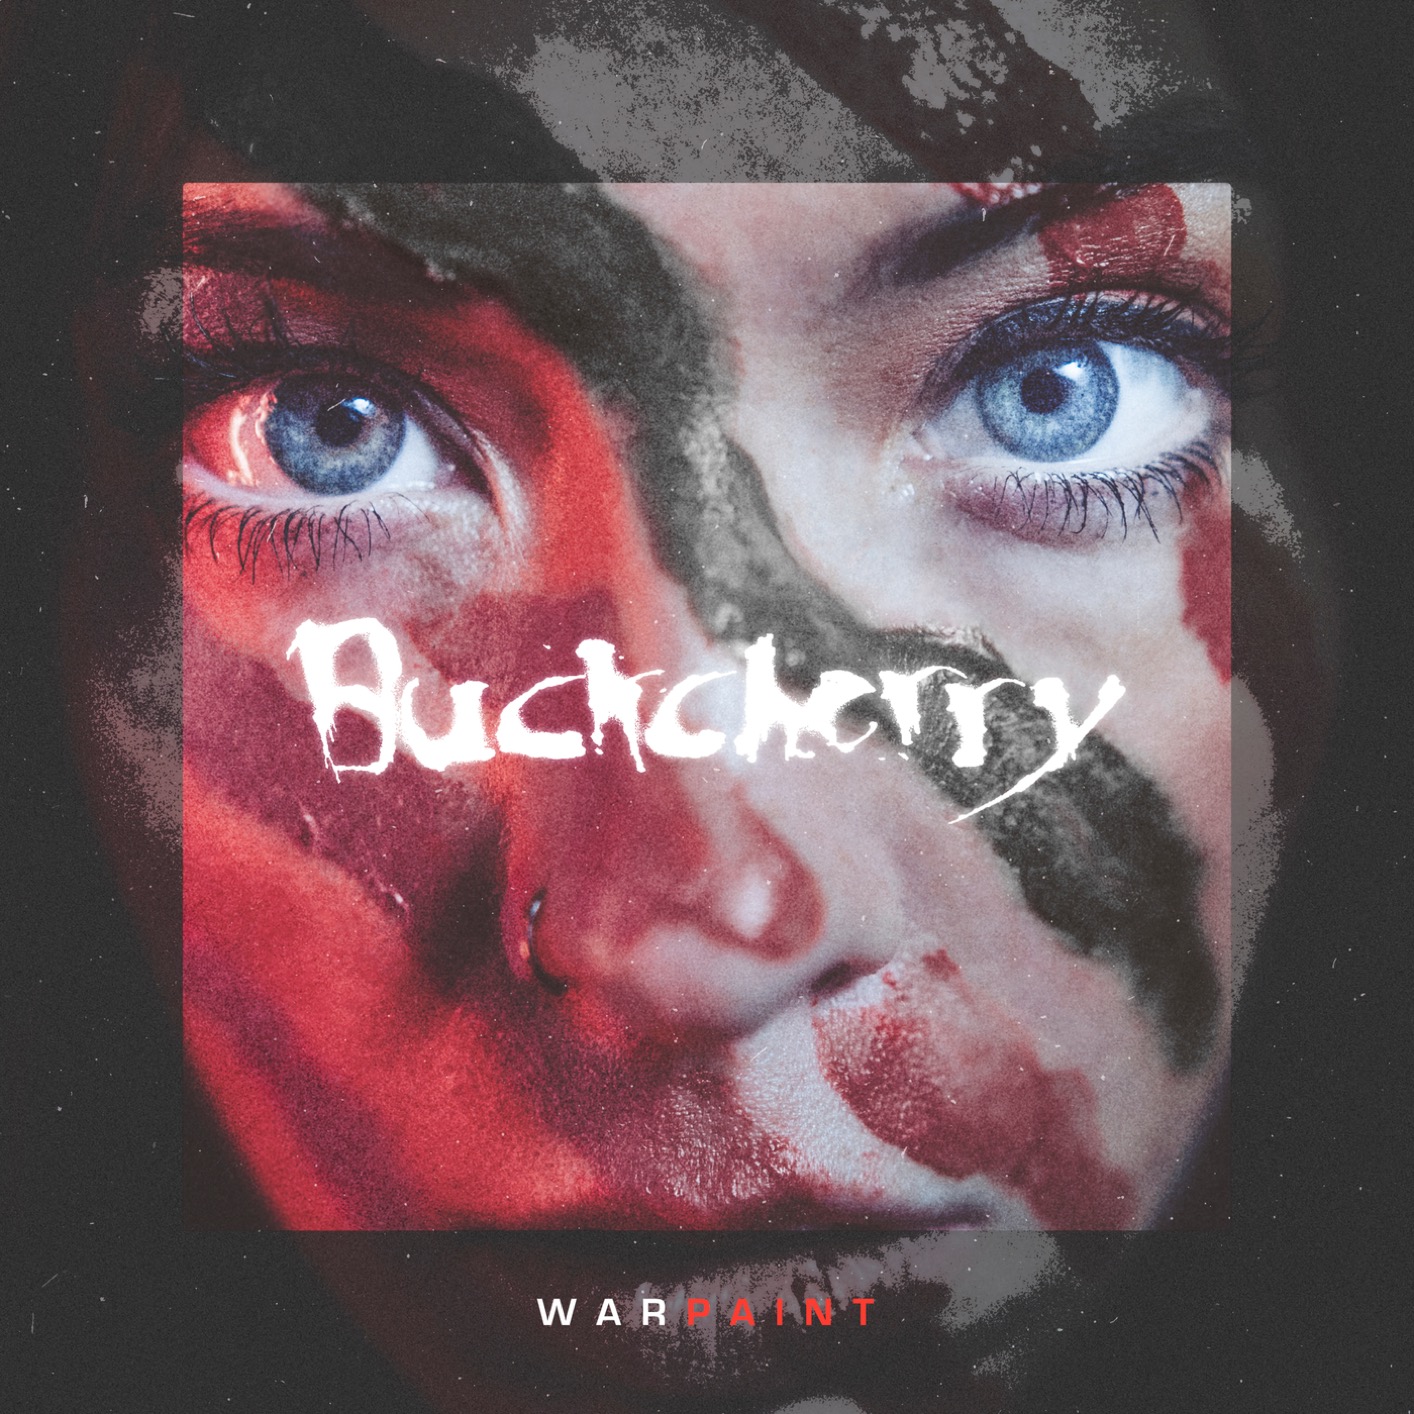 Buckcherry - Warpaint (2019) [FLAC 24bit/48kHz]